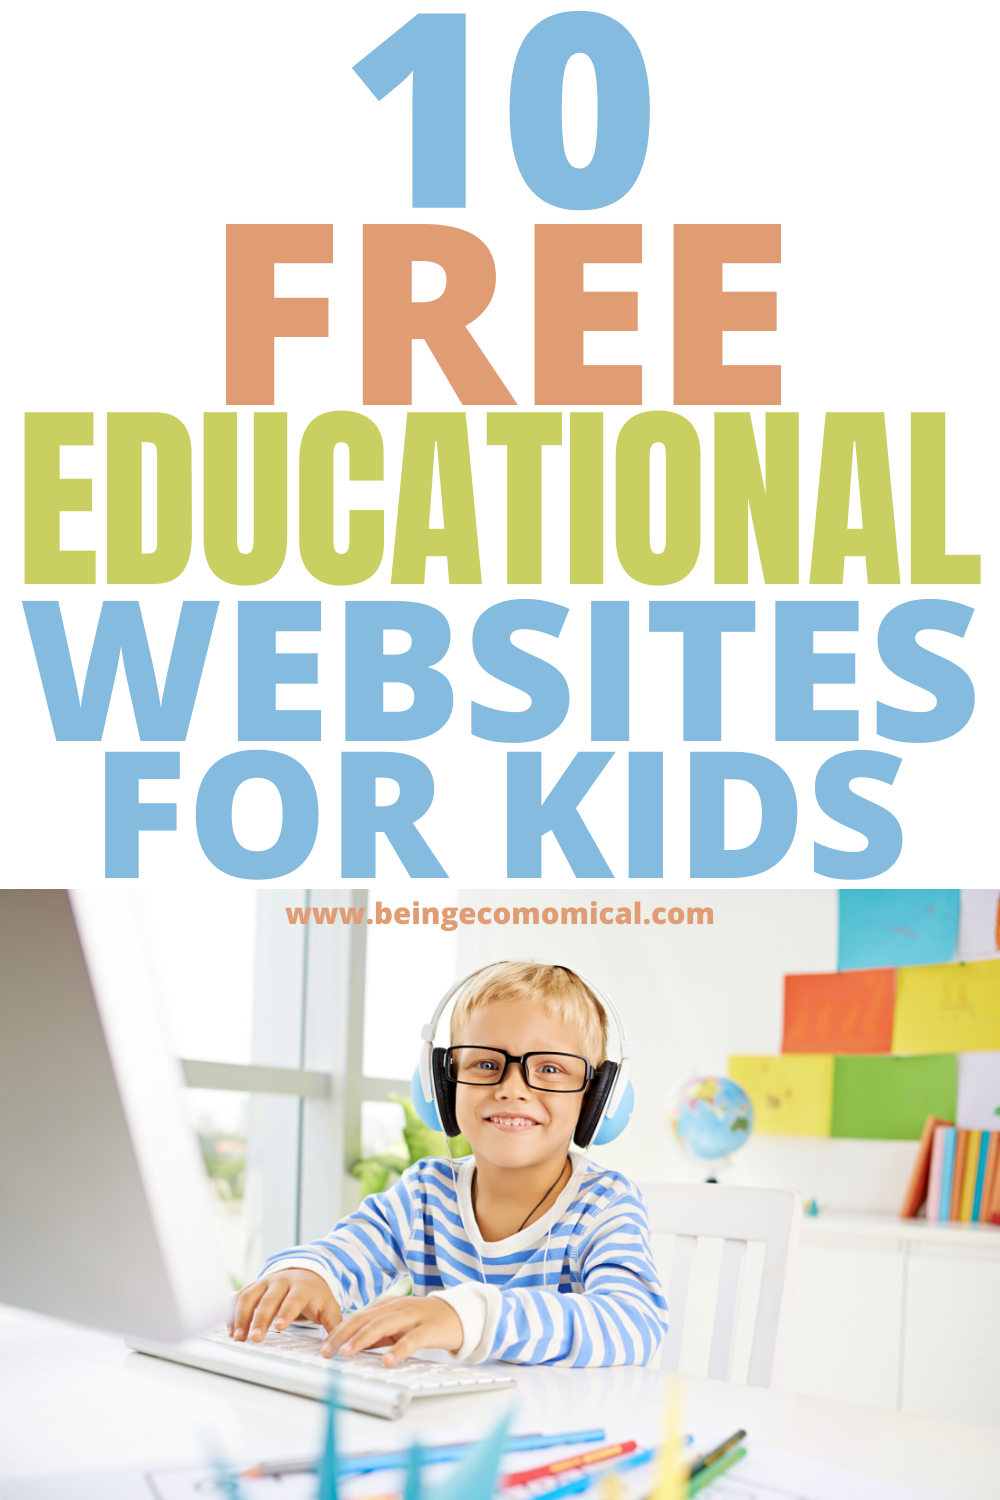 homework educational websites